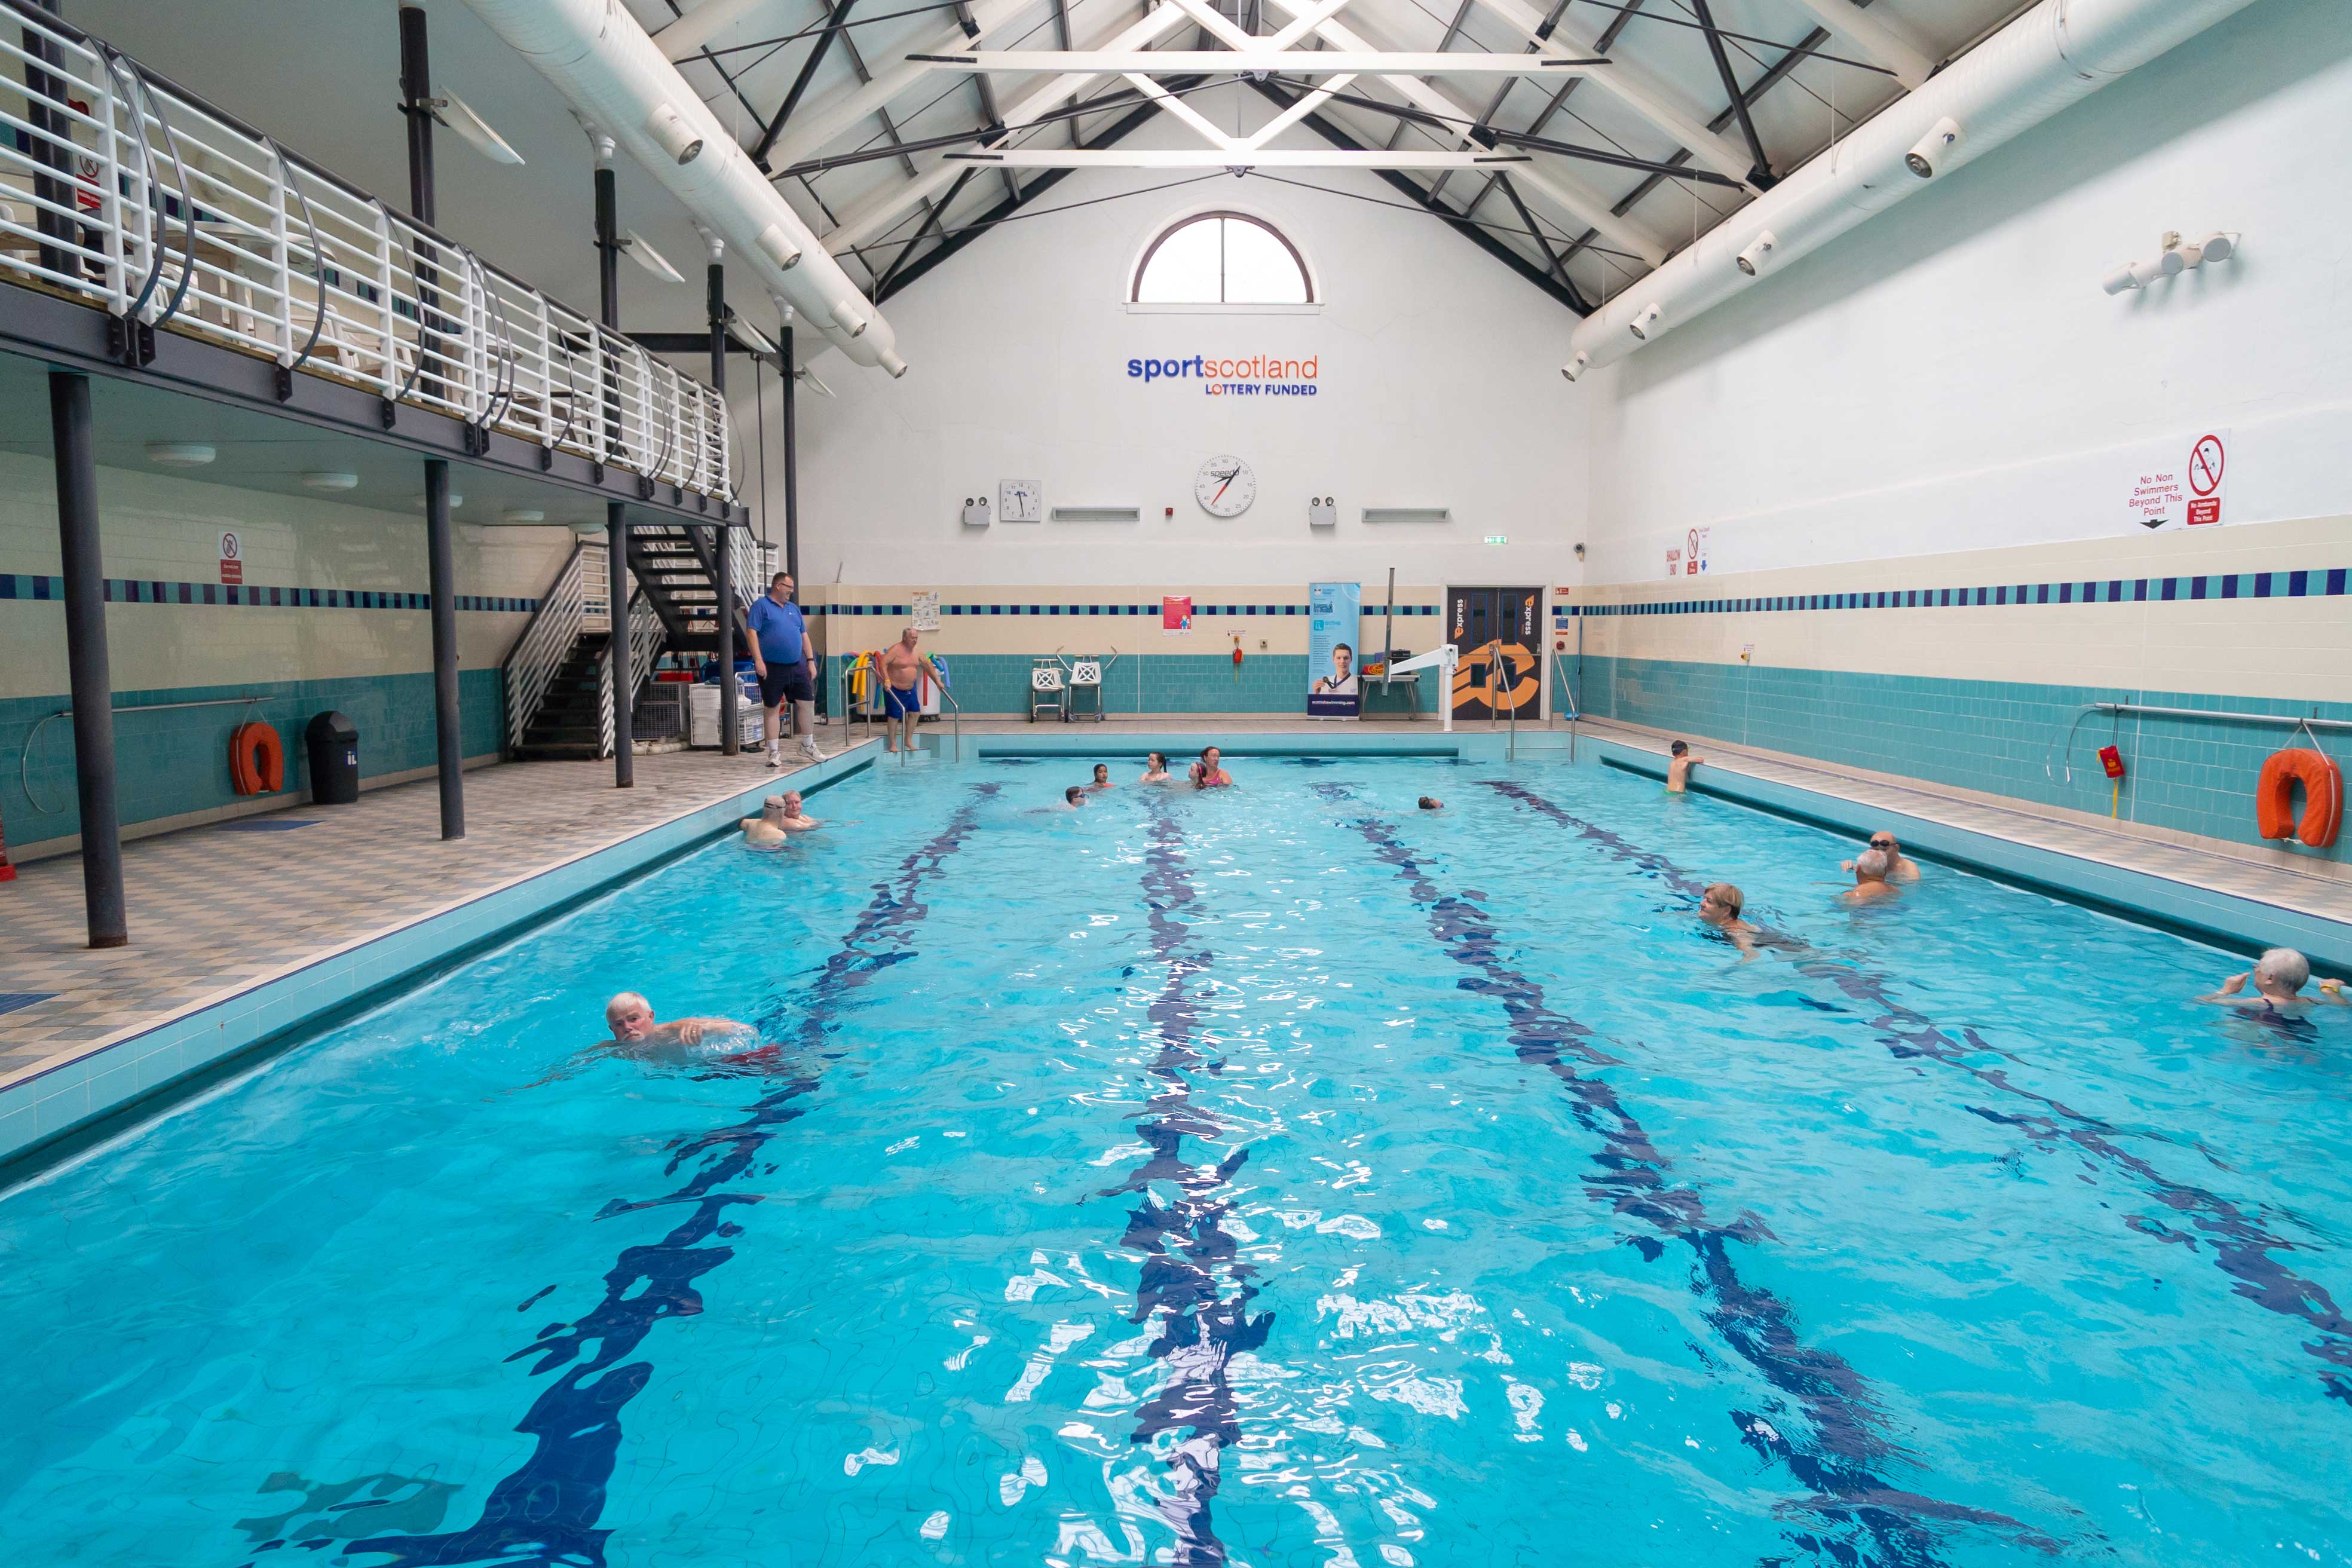 Port Glasgow Swimming Pool